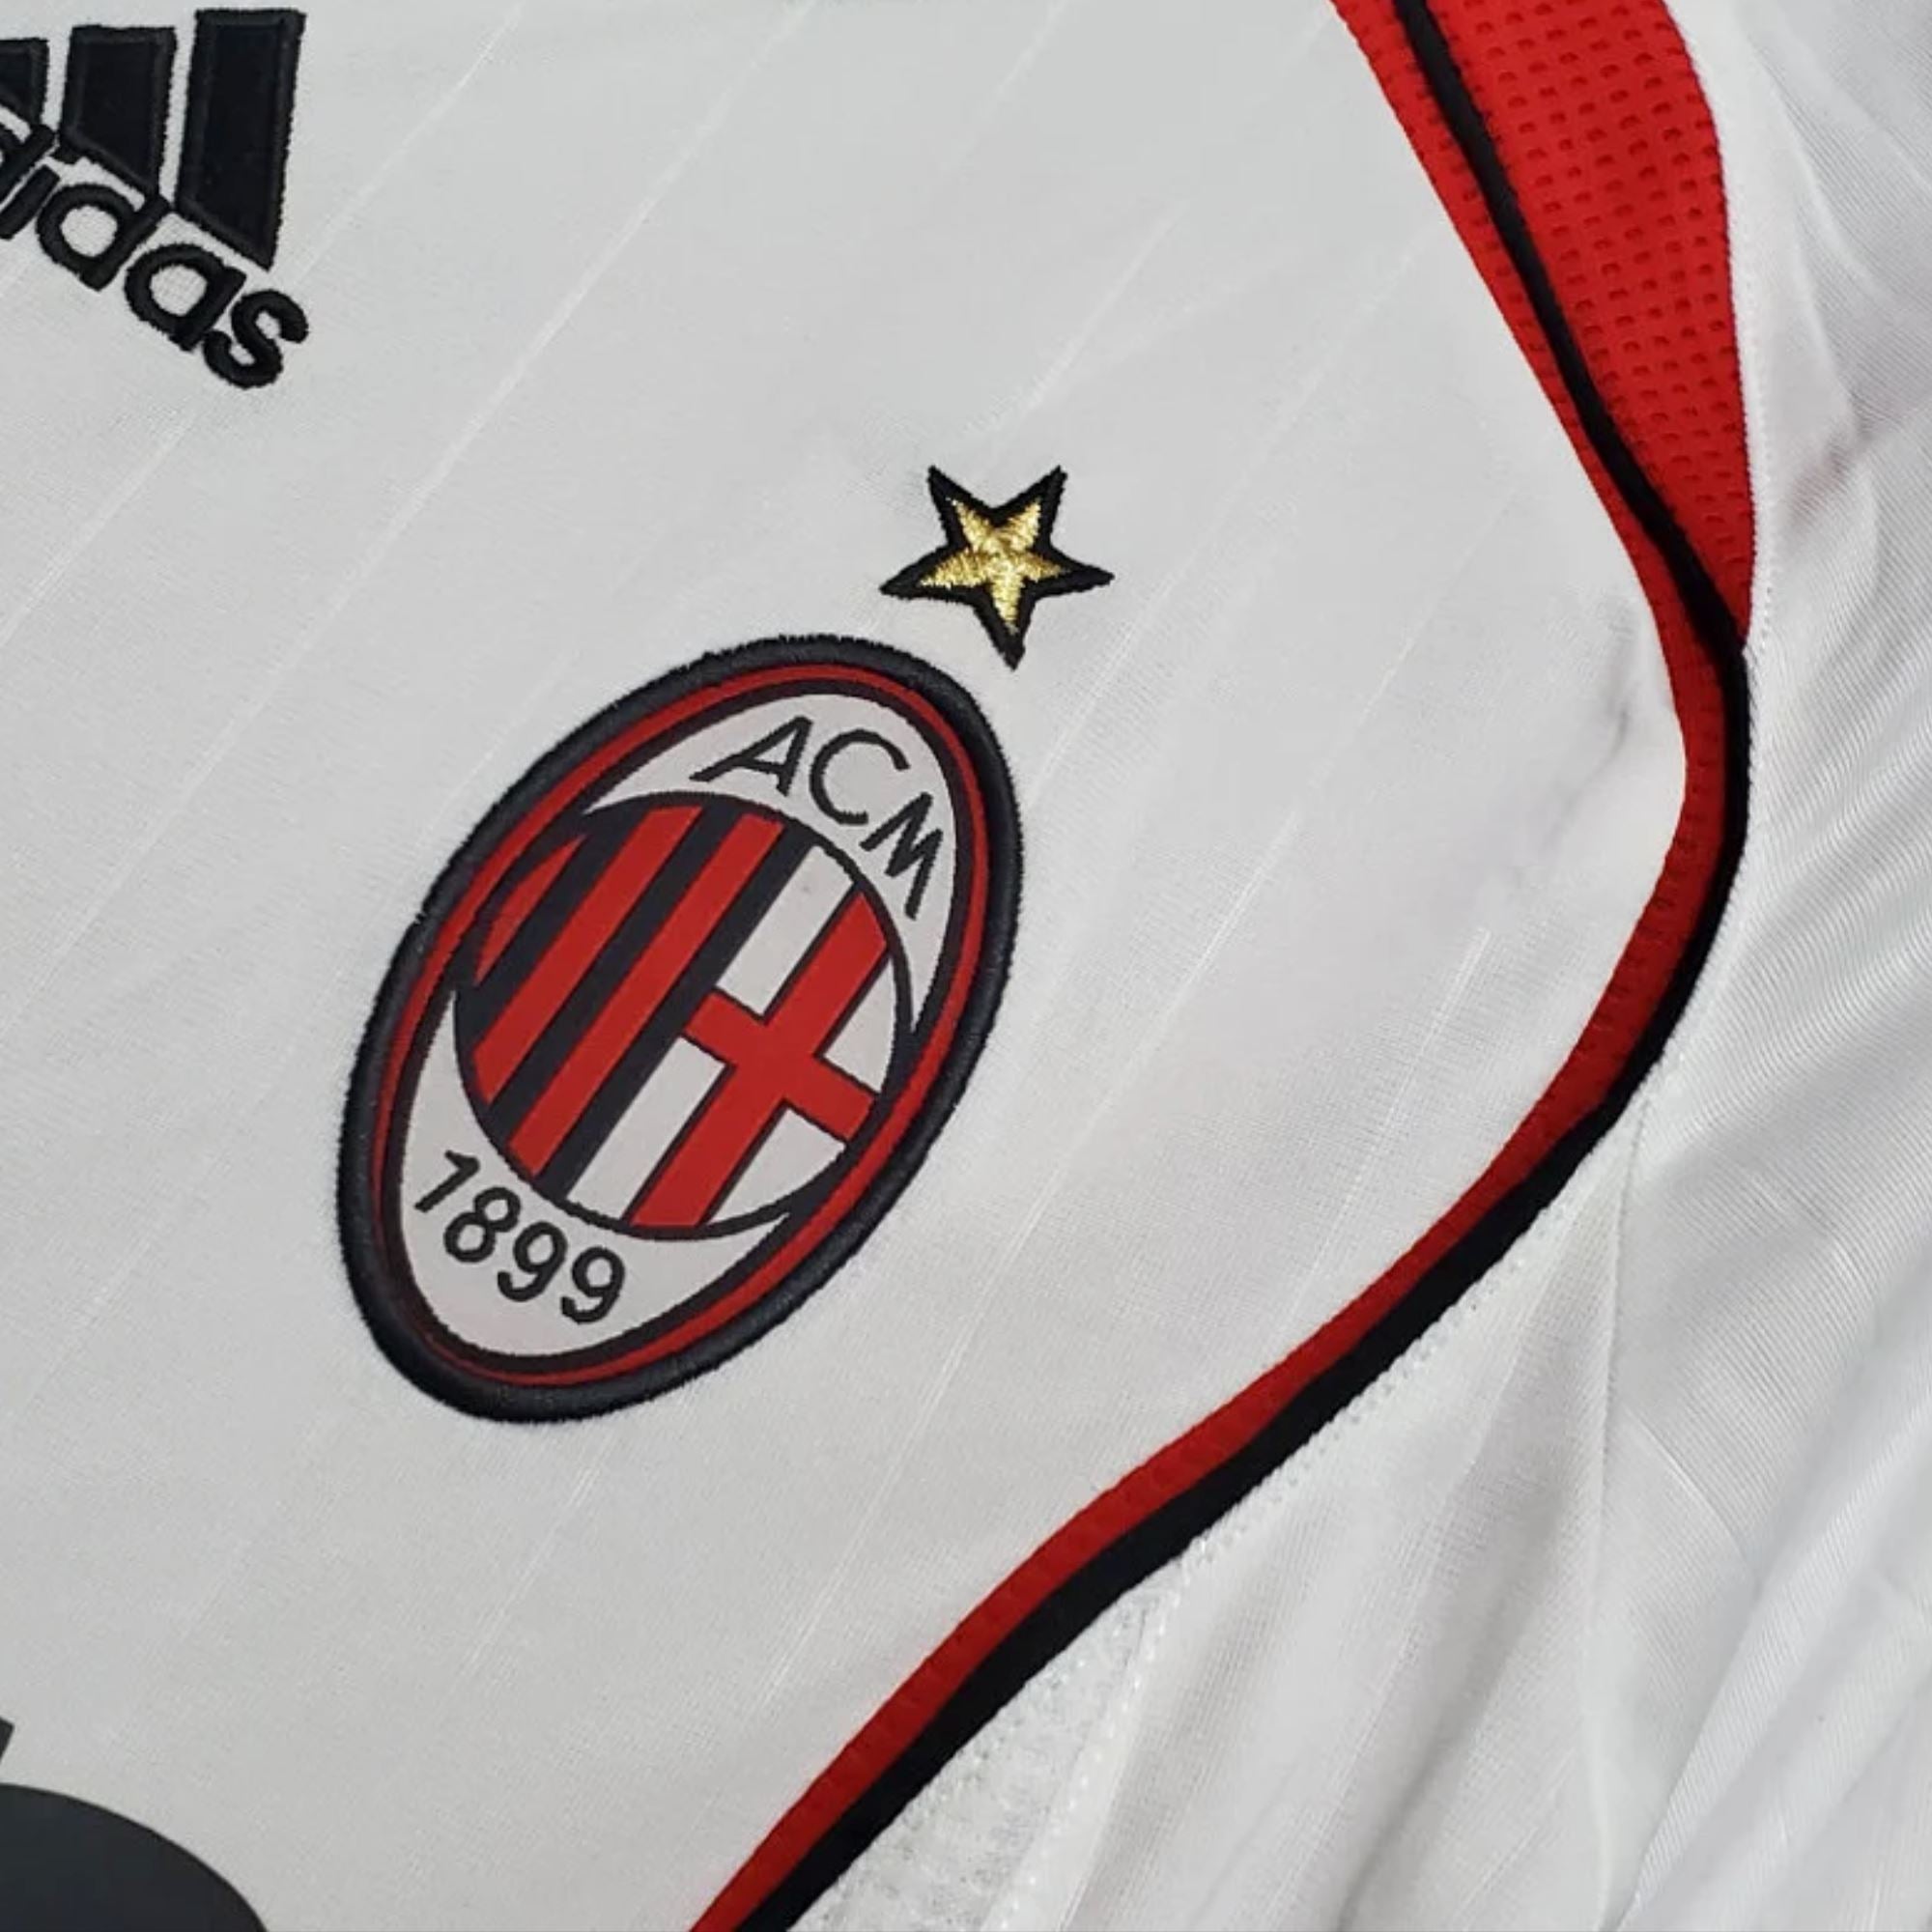 2006-07 AC Milan Athens Champions League final jersey 